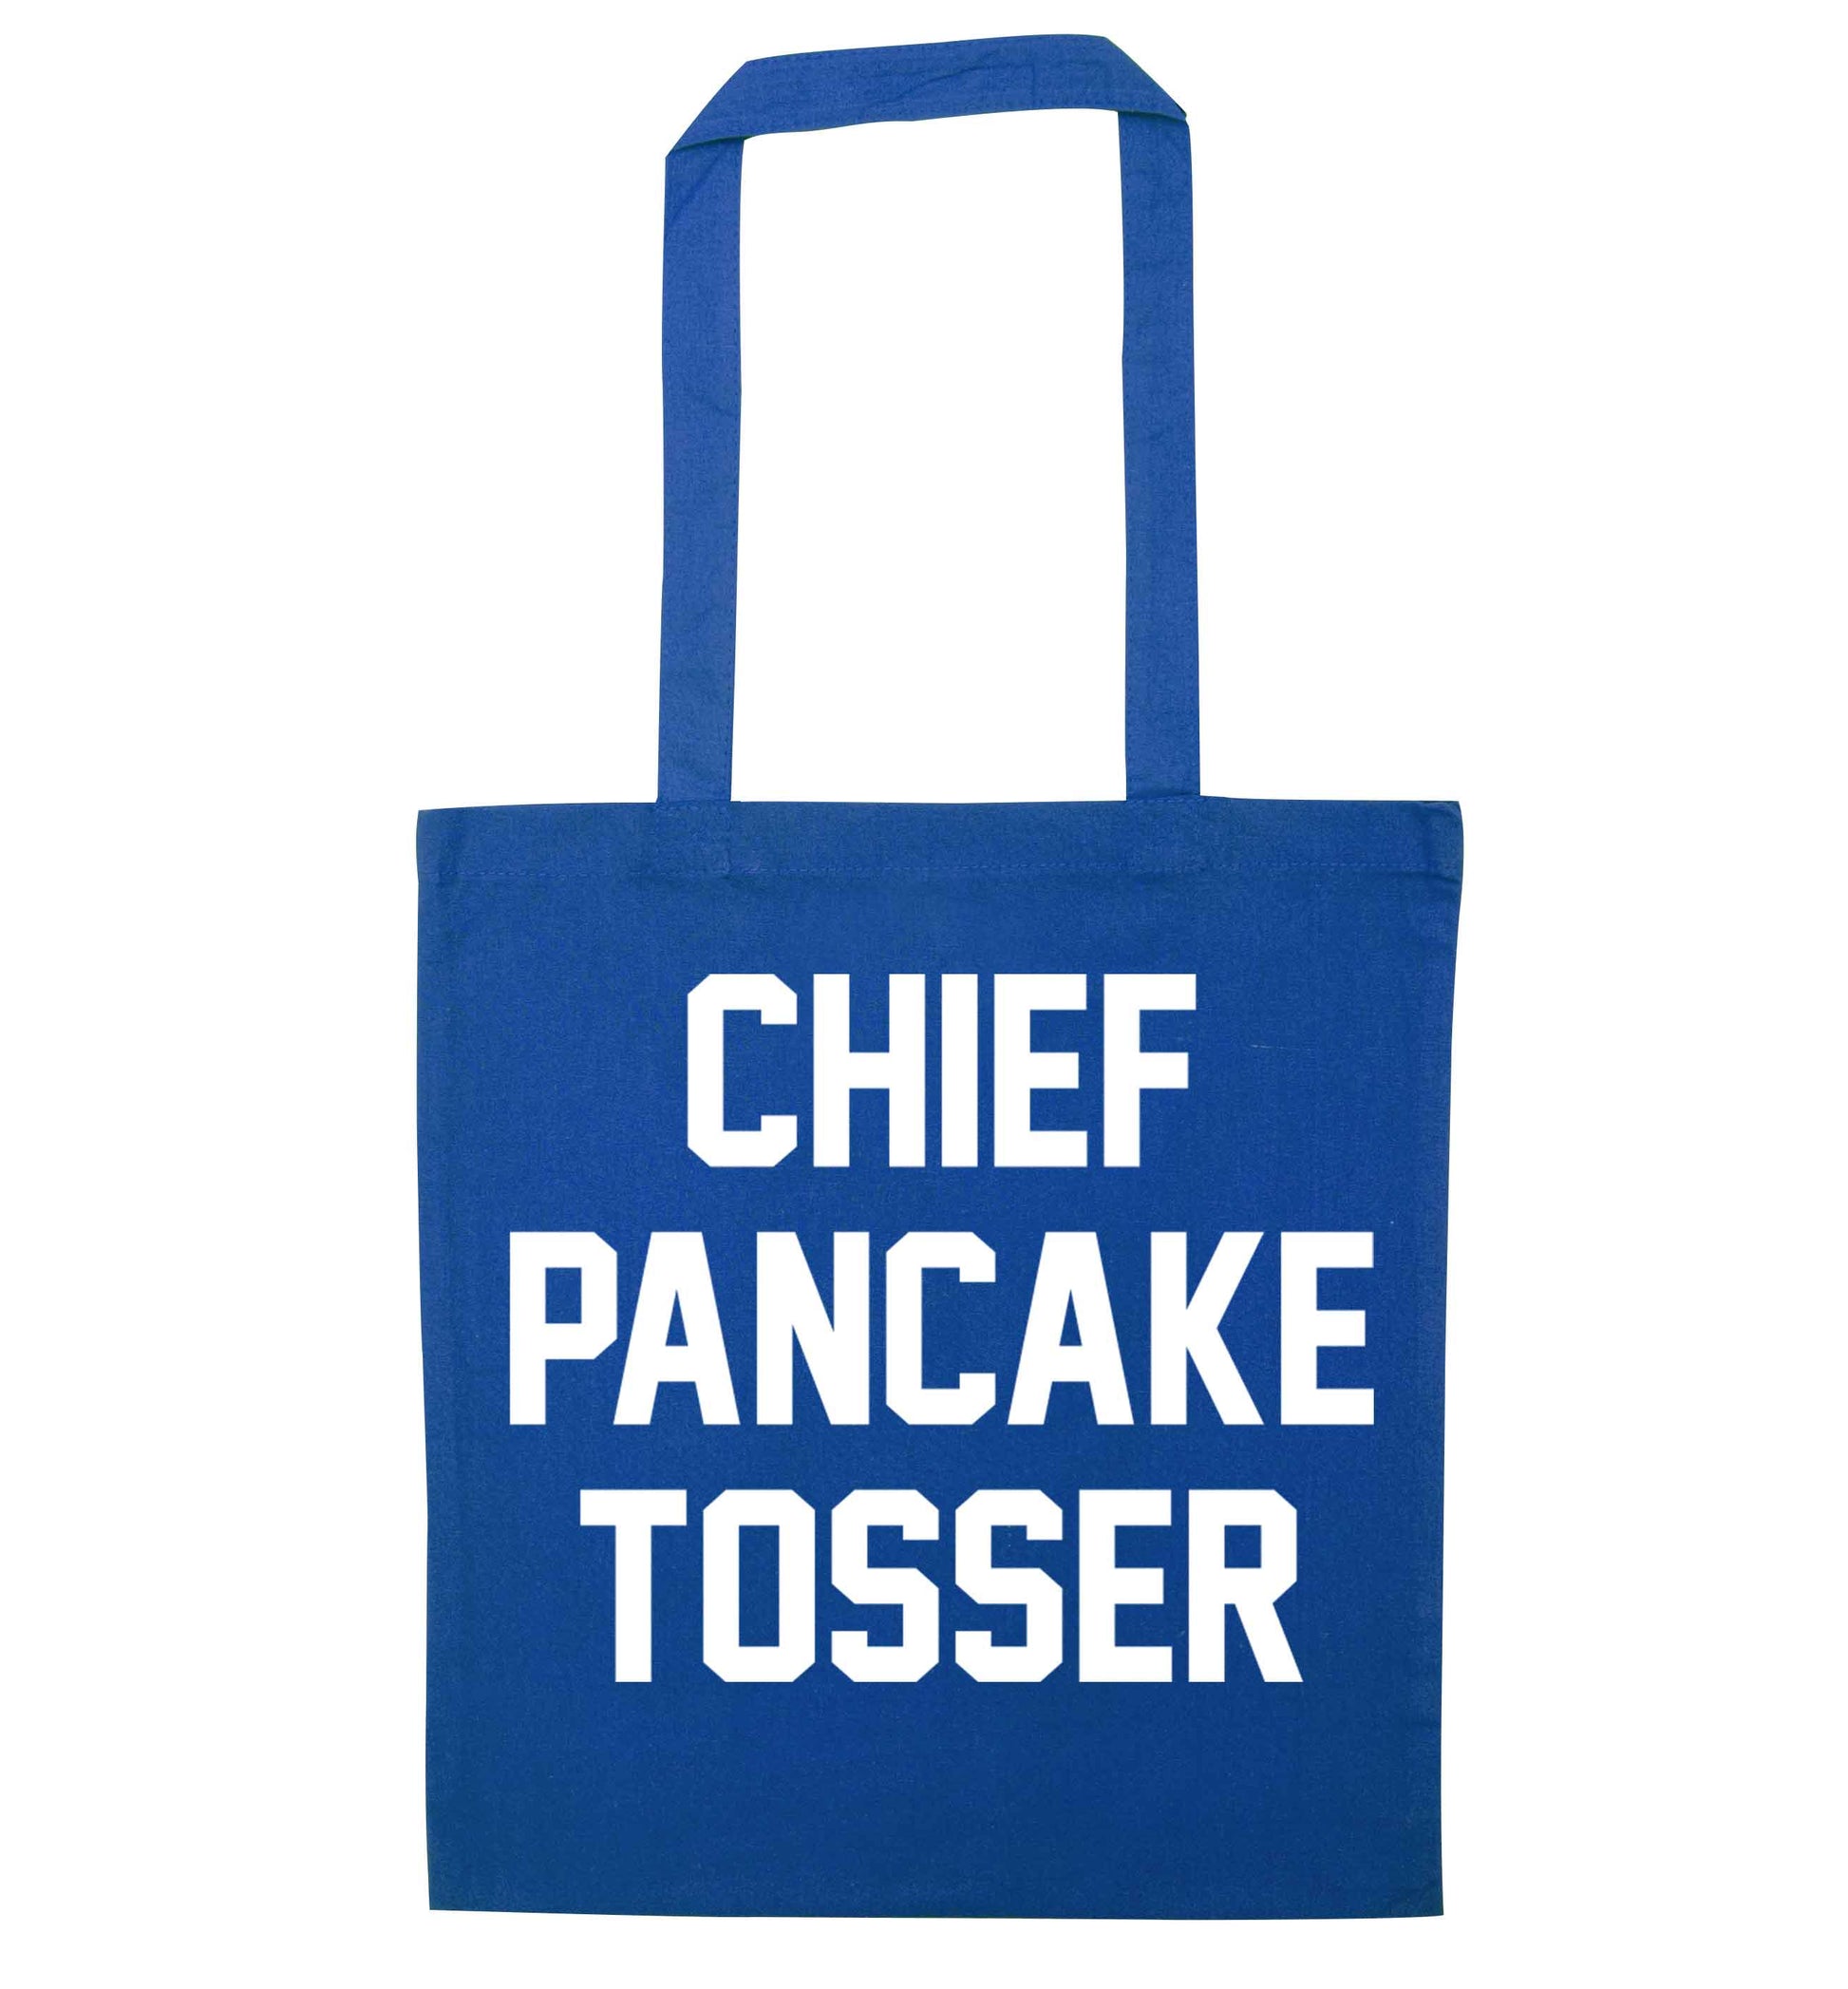 Chief pancake tosser blue tote bag